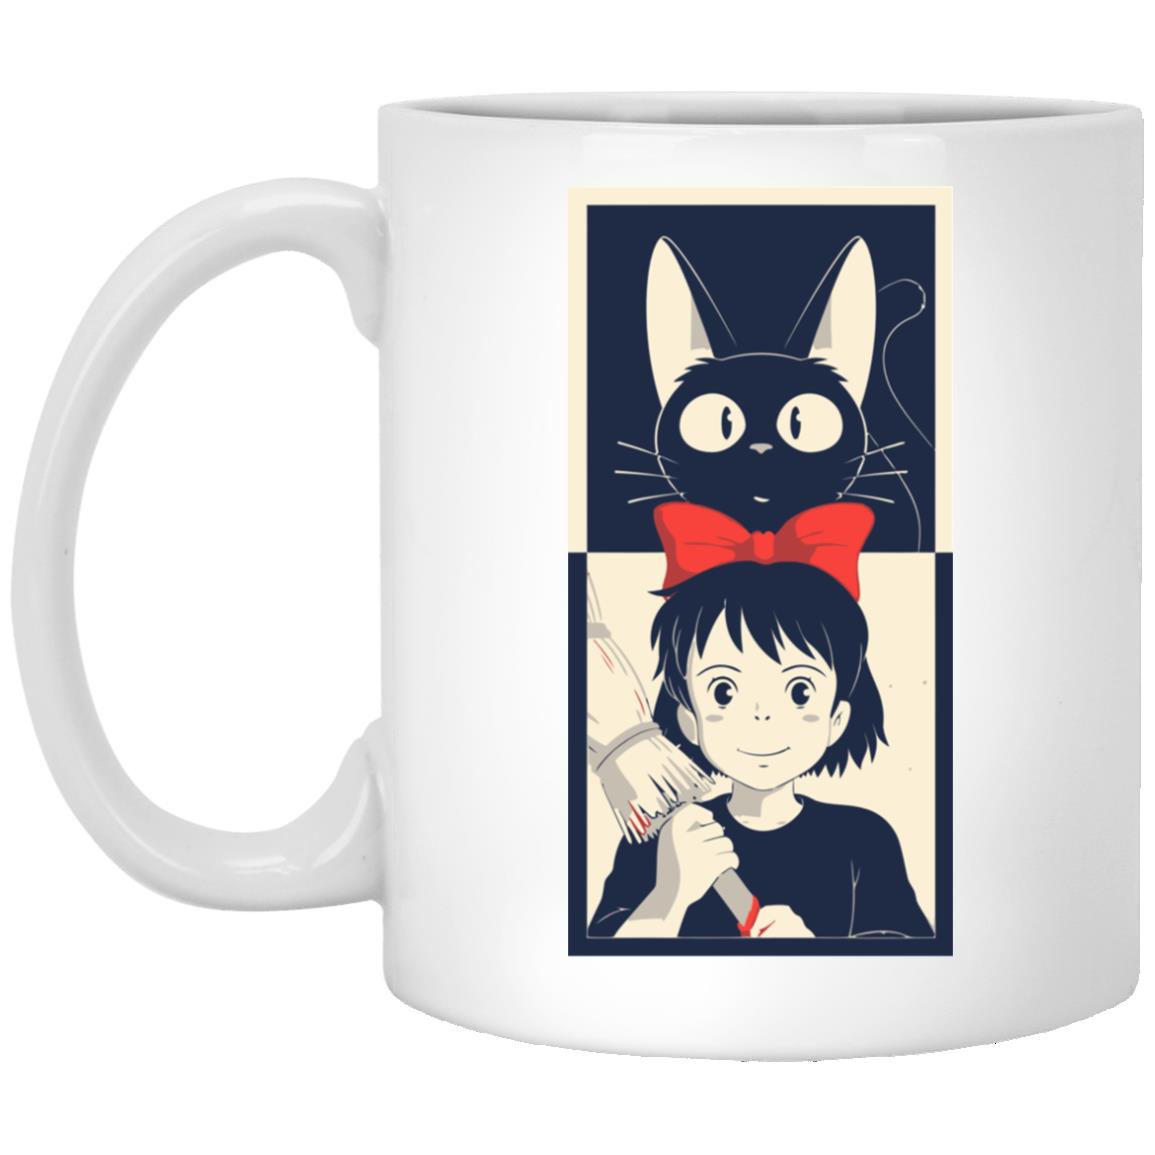 Kiki’s Delivery Service Mug Ghibli Store ghibli.store